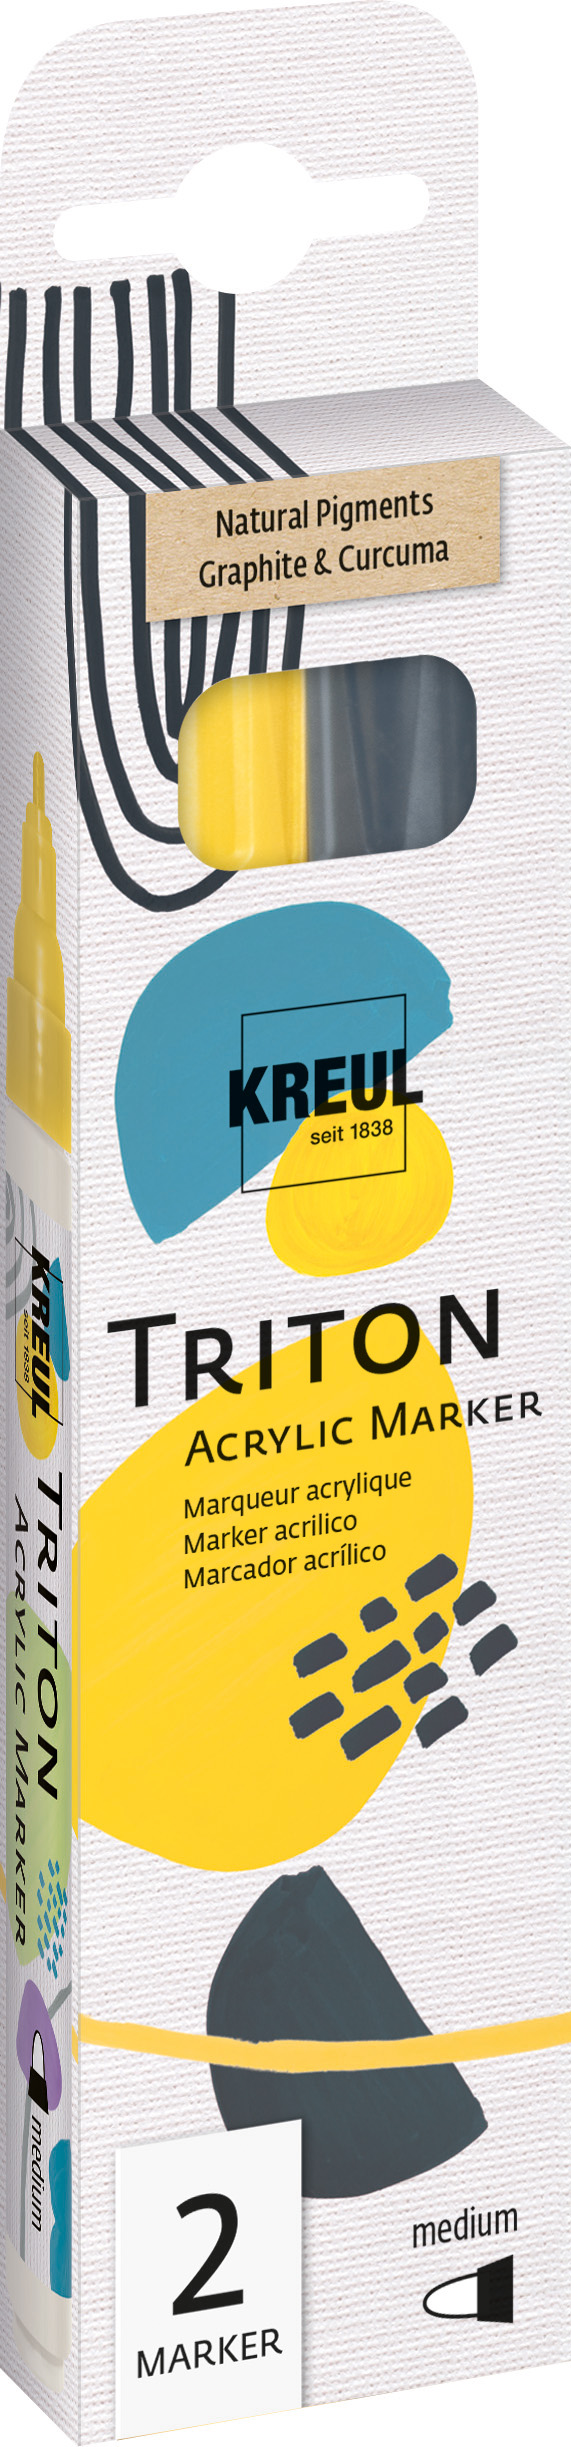 Marqueur acrylique TRITON Acrylic Marker fine sur